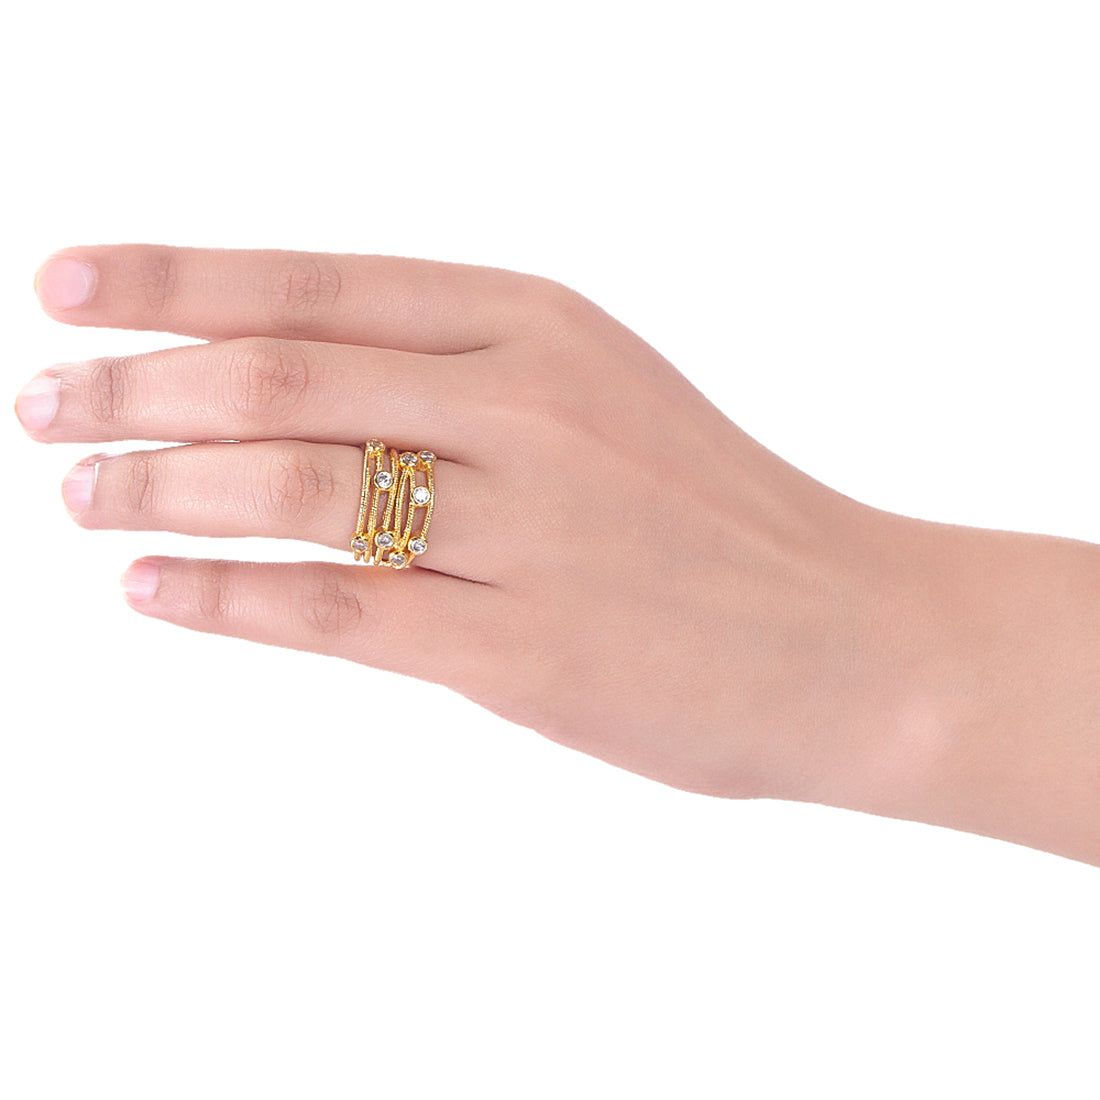 Cutwork Design Layered Style Ring